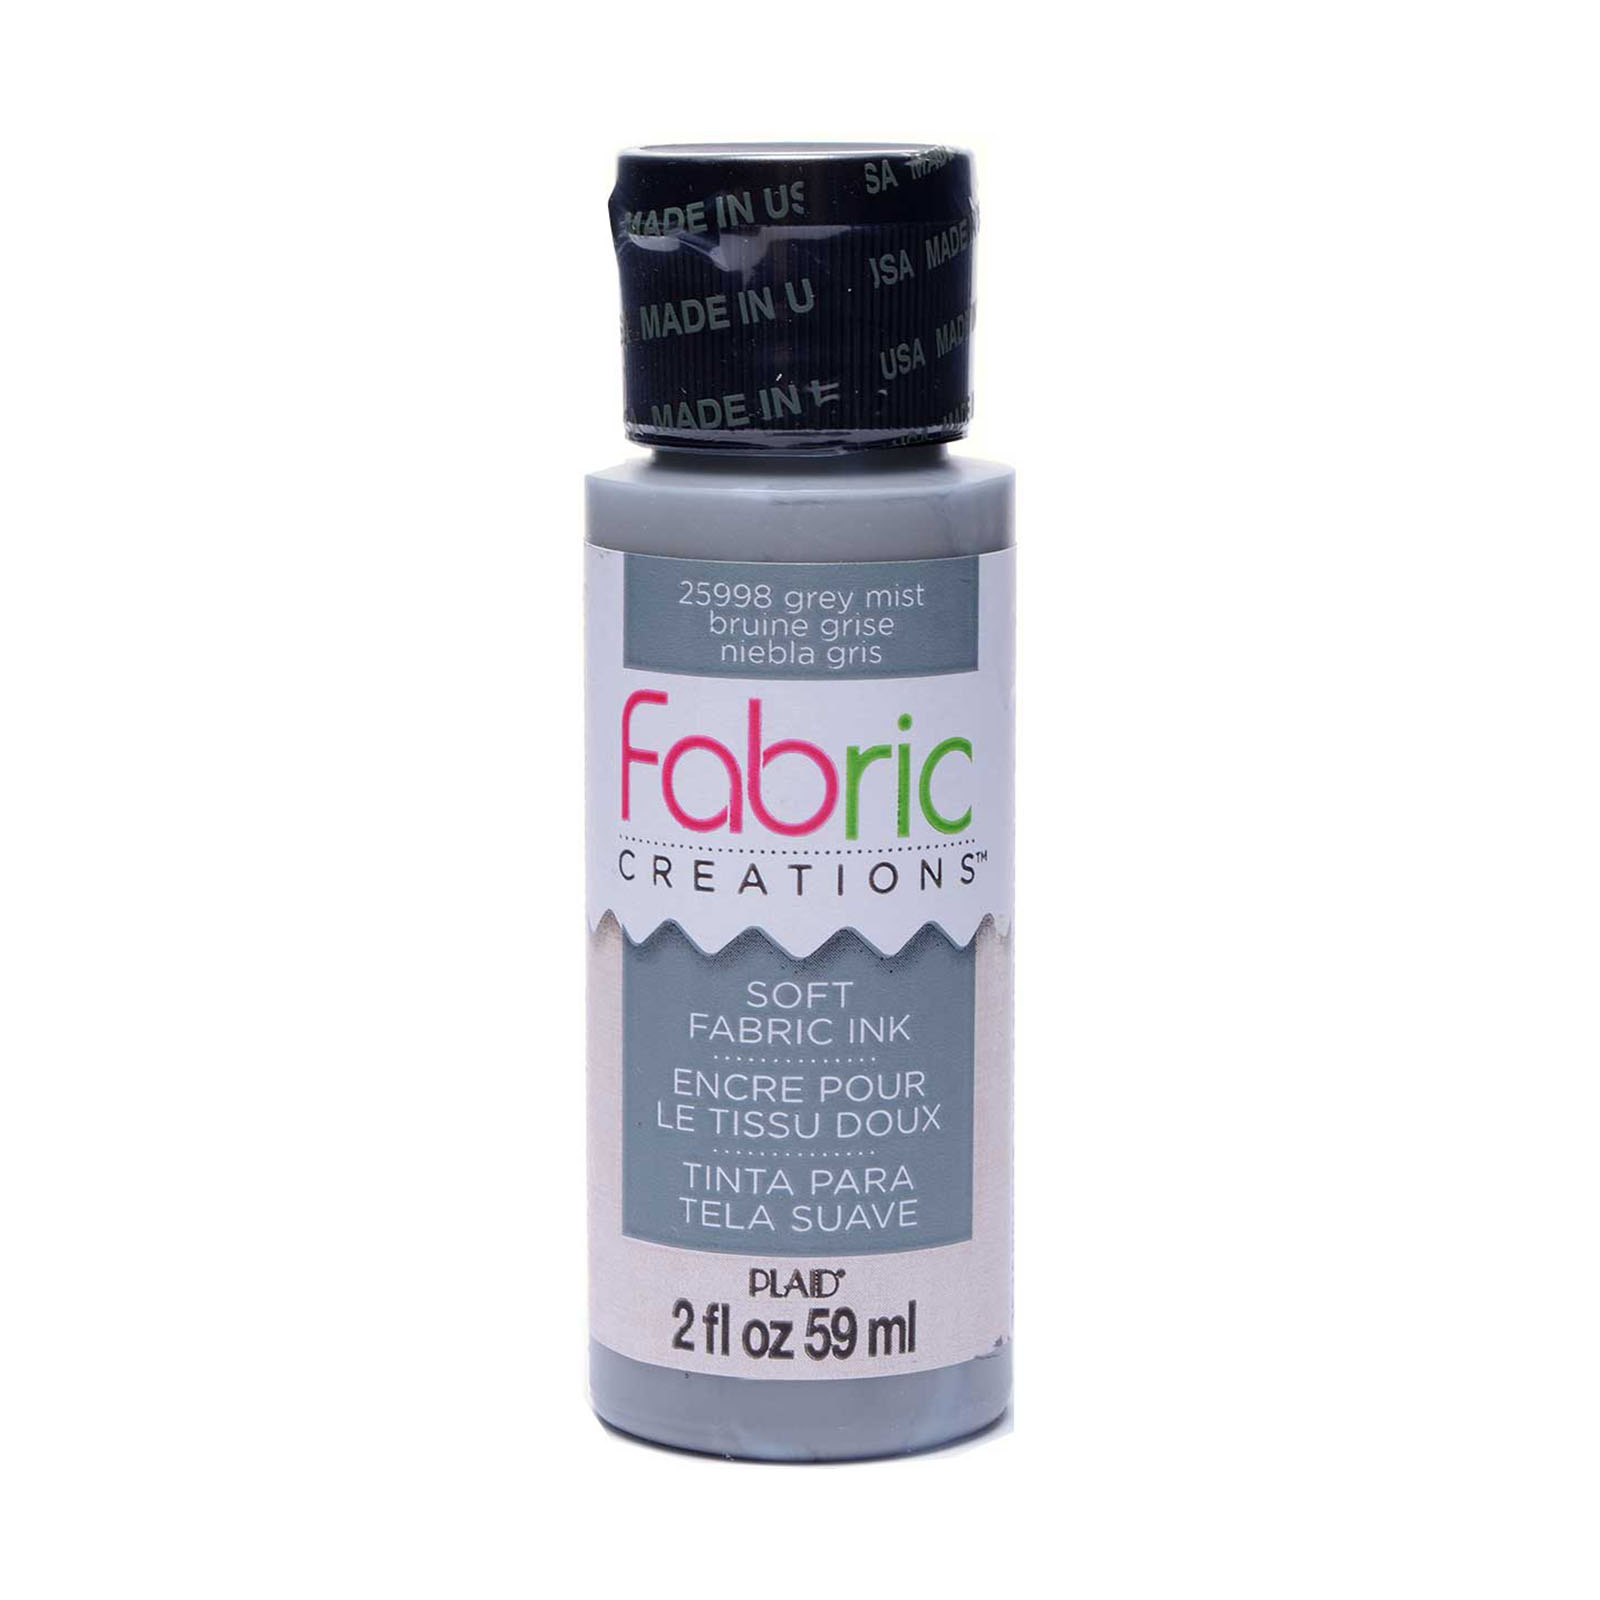 Fabric Creations • Soft fabric ink 59ml Grey mist